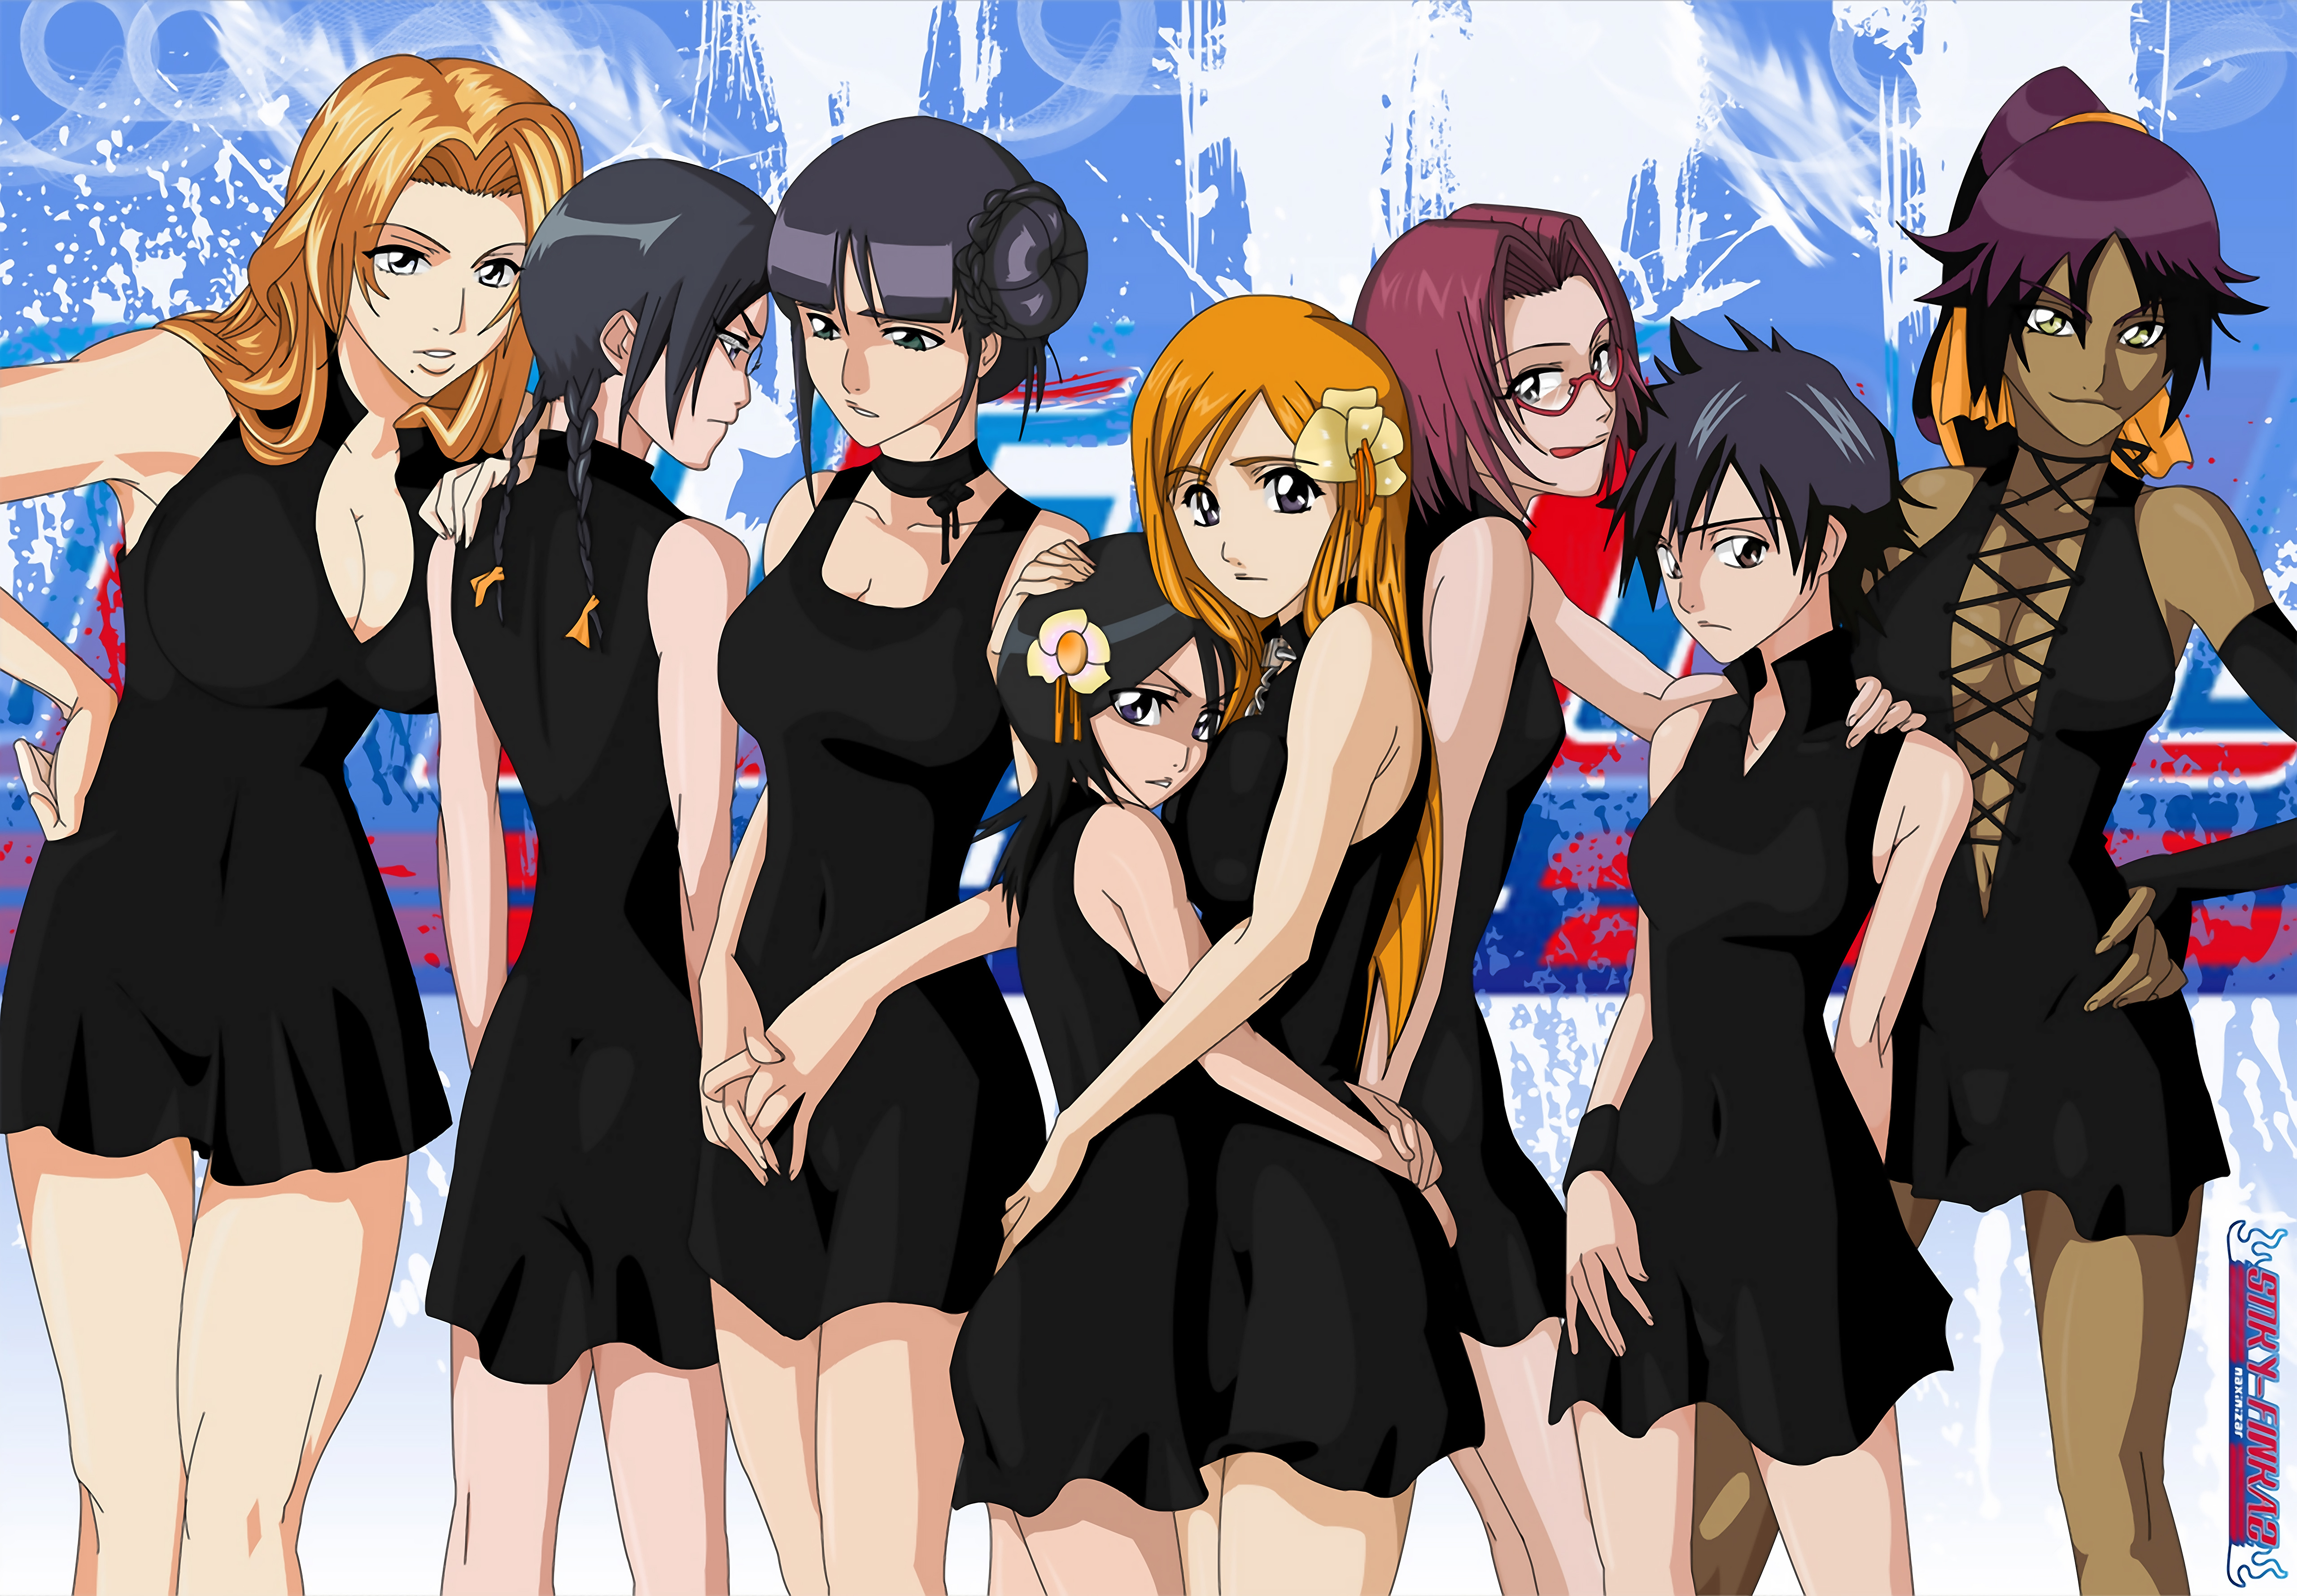 Group of anime characters from the series Bleach, including Lisa Yadomaru, Yoruichi Shihôin, Tatsuki Arisawa, Orihime Inoue, Rukia Kuchiki, Nemu Kurotsuchi, Nanao Ise, Rangiku Matsumoto, and Chizuru Honshou.